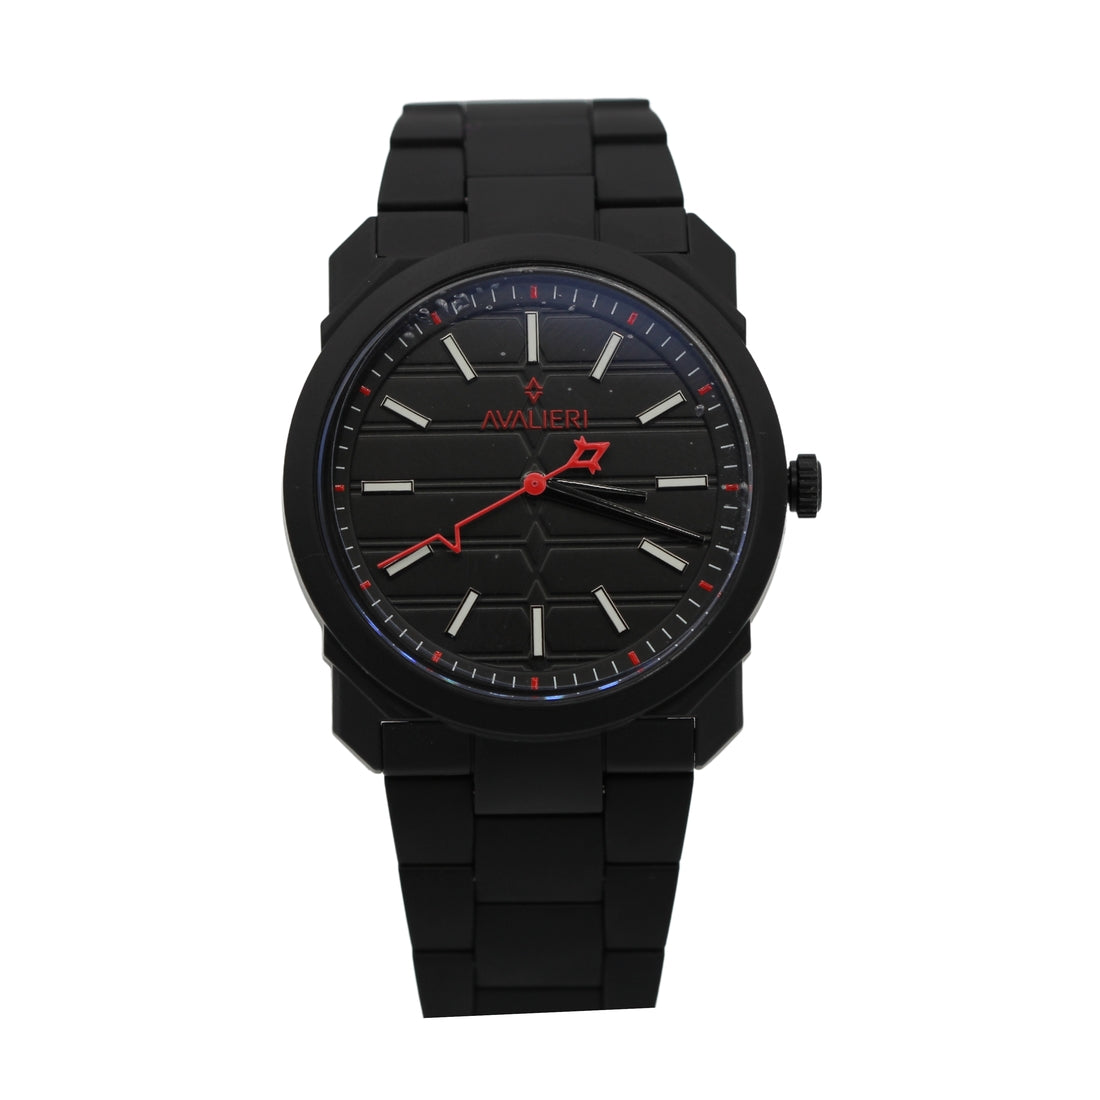 Avalieri Men's Quartz Watch with Black Dial - AV-2575B